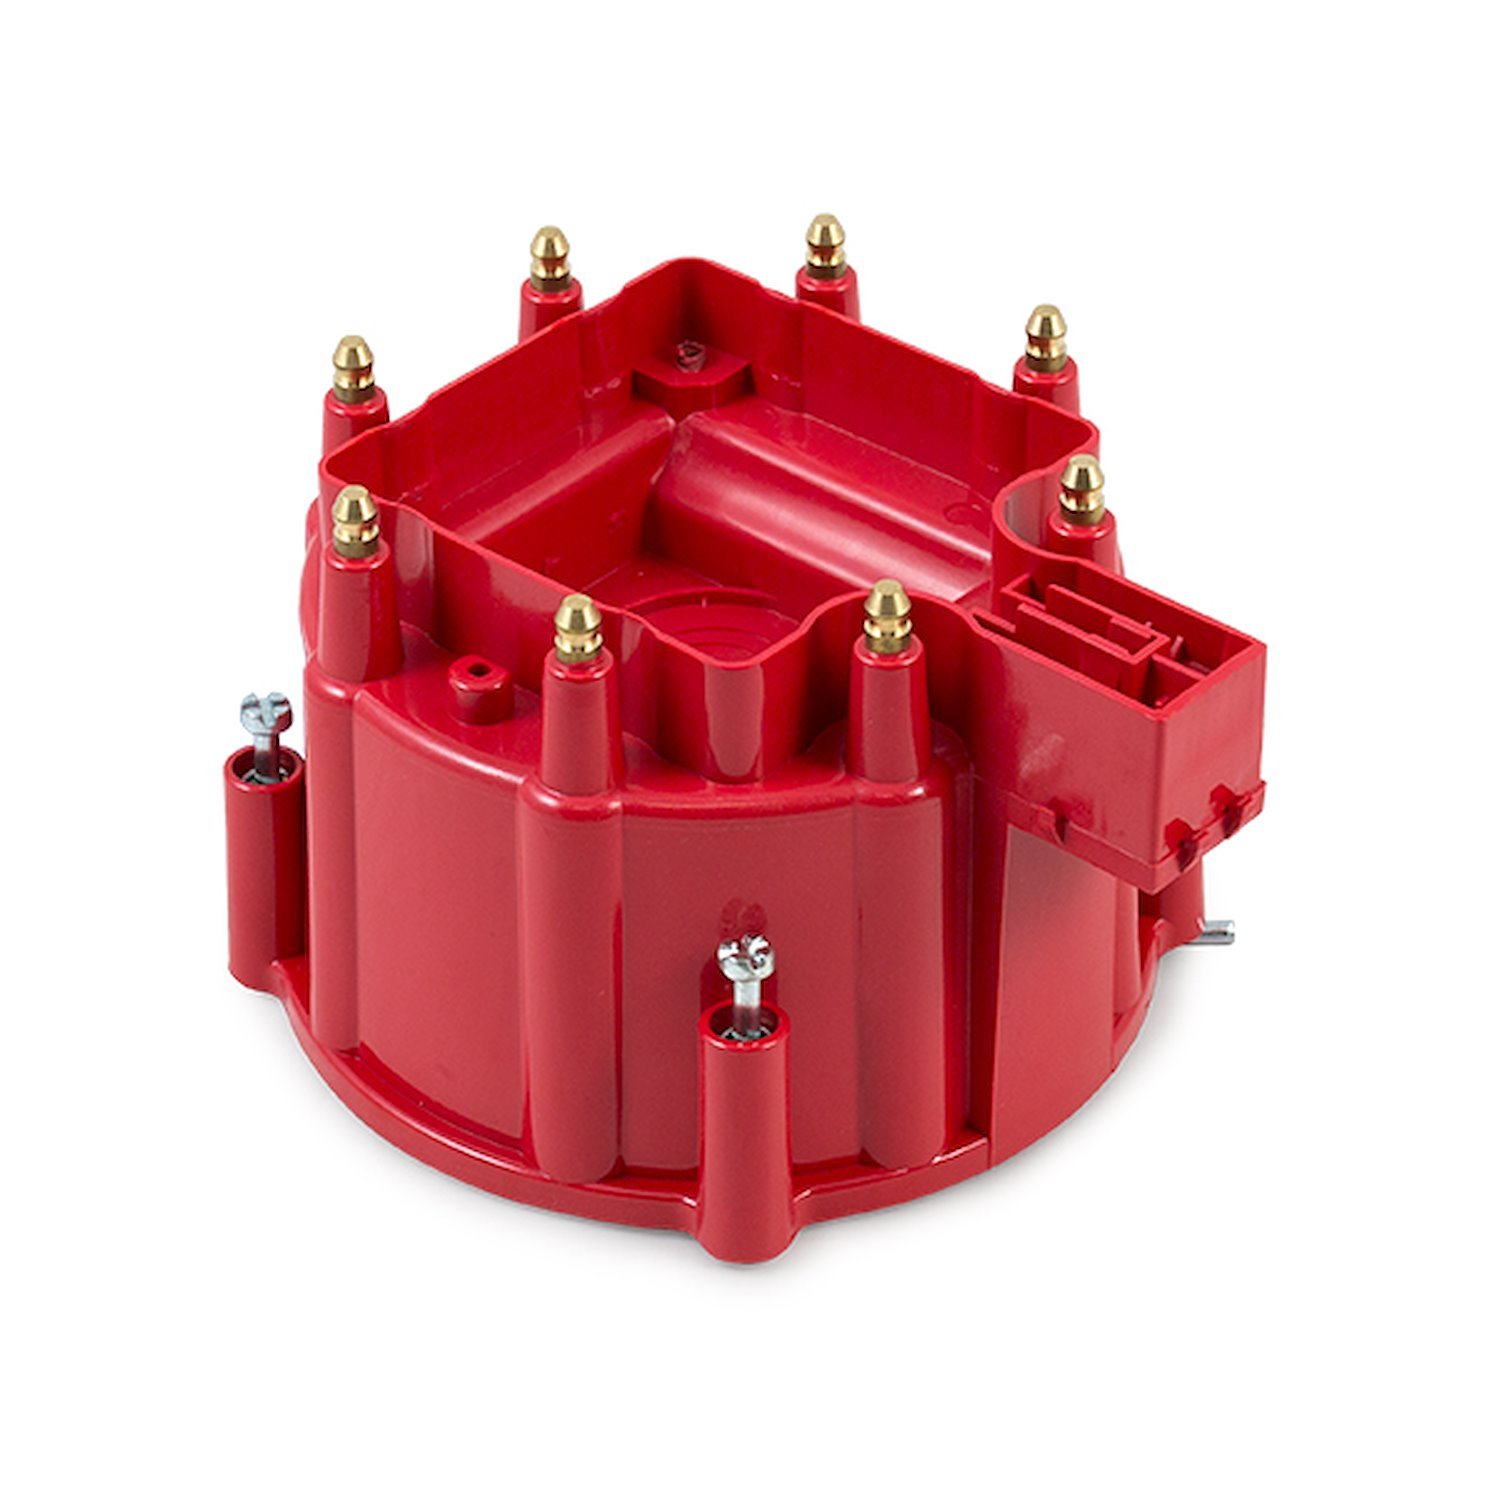 JM6904R HEI Distributor Cap, 8 Cylinder Male, Red